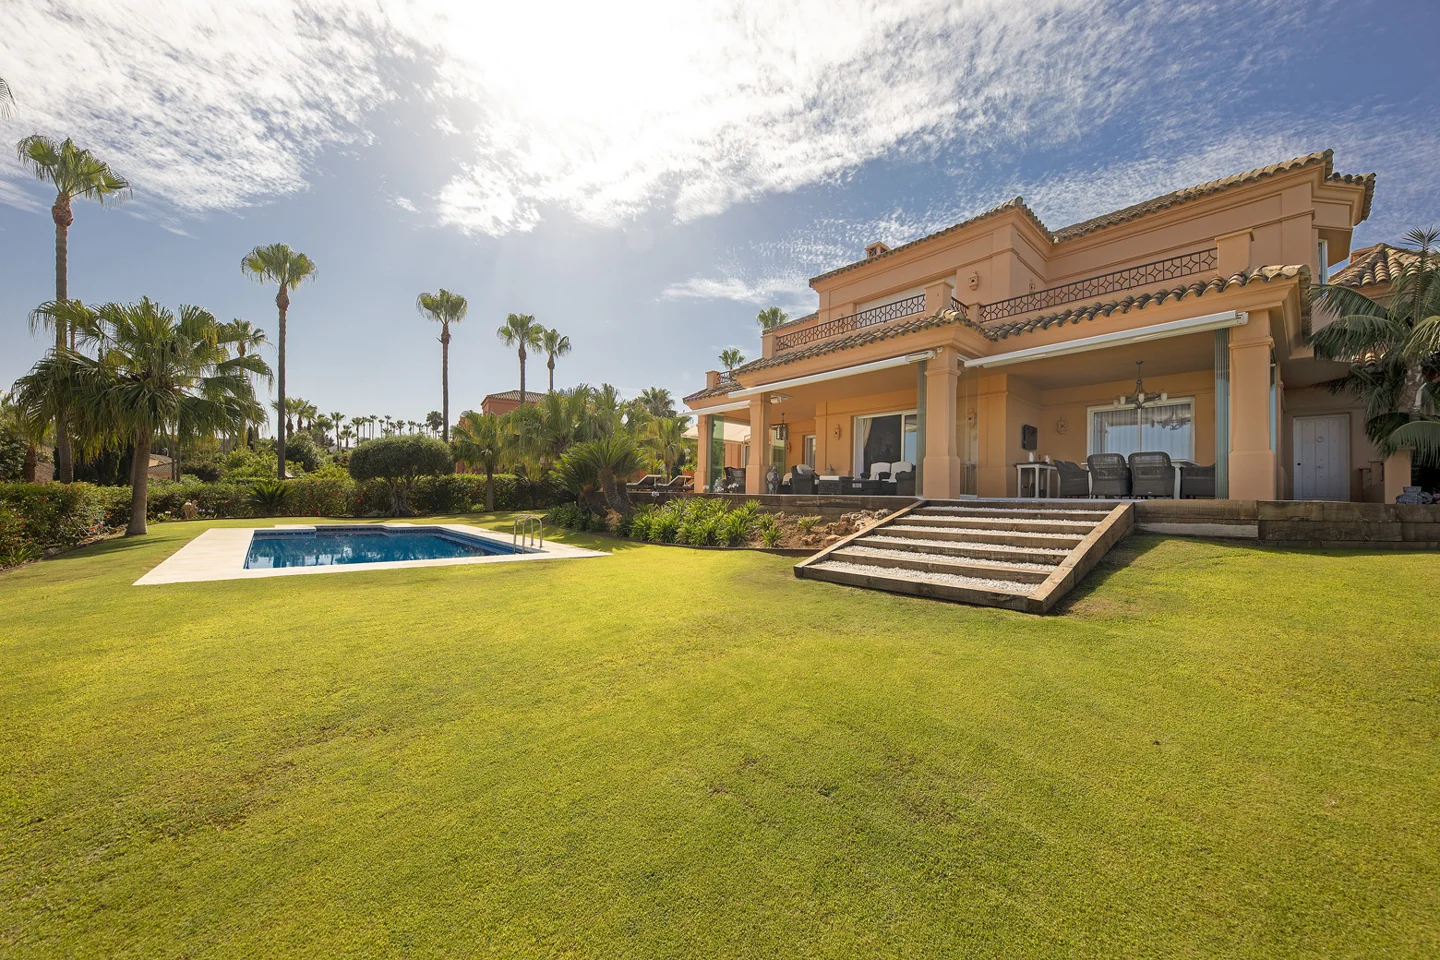 Great Villa with tropical garden and sea views